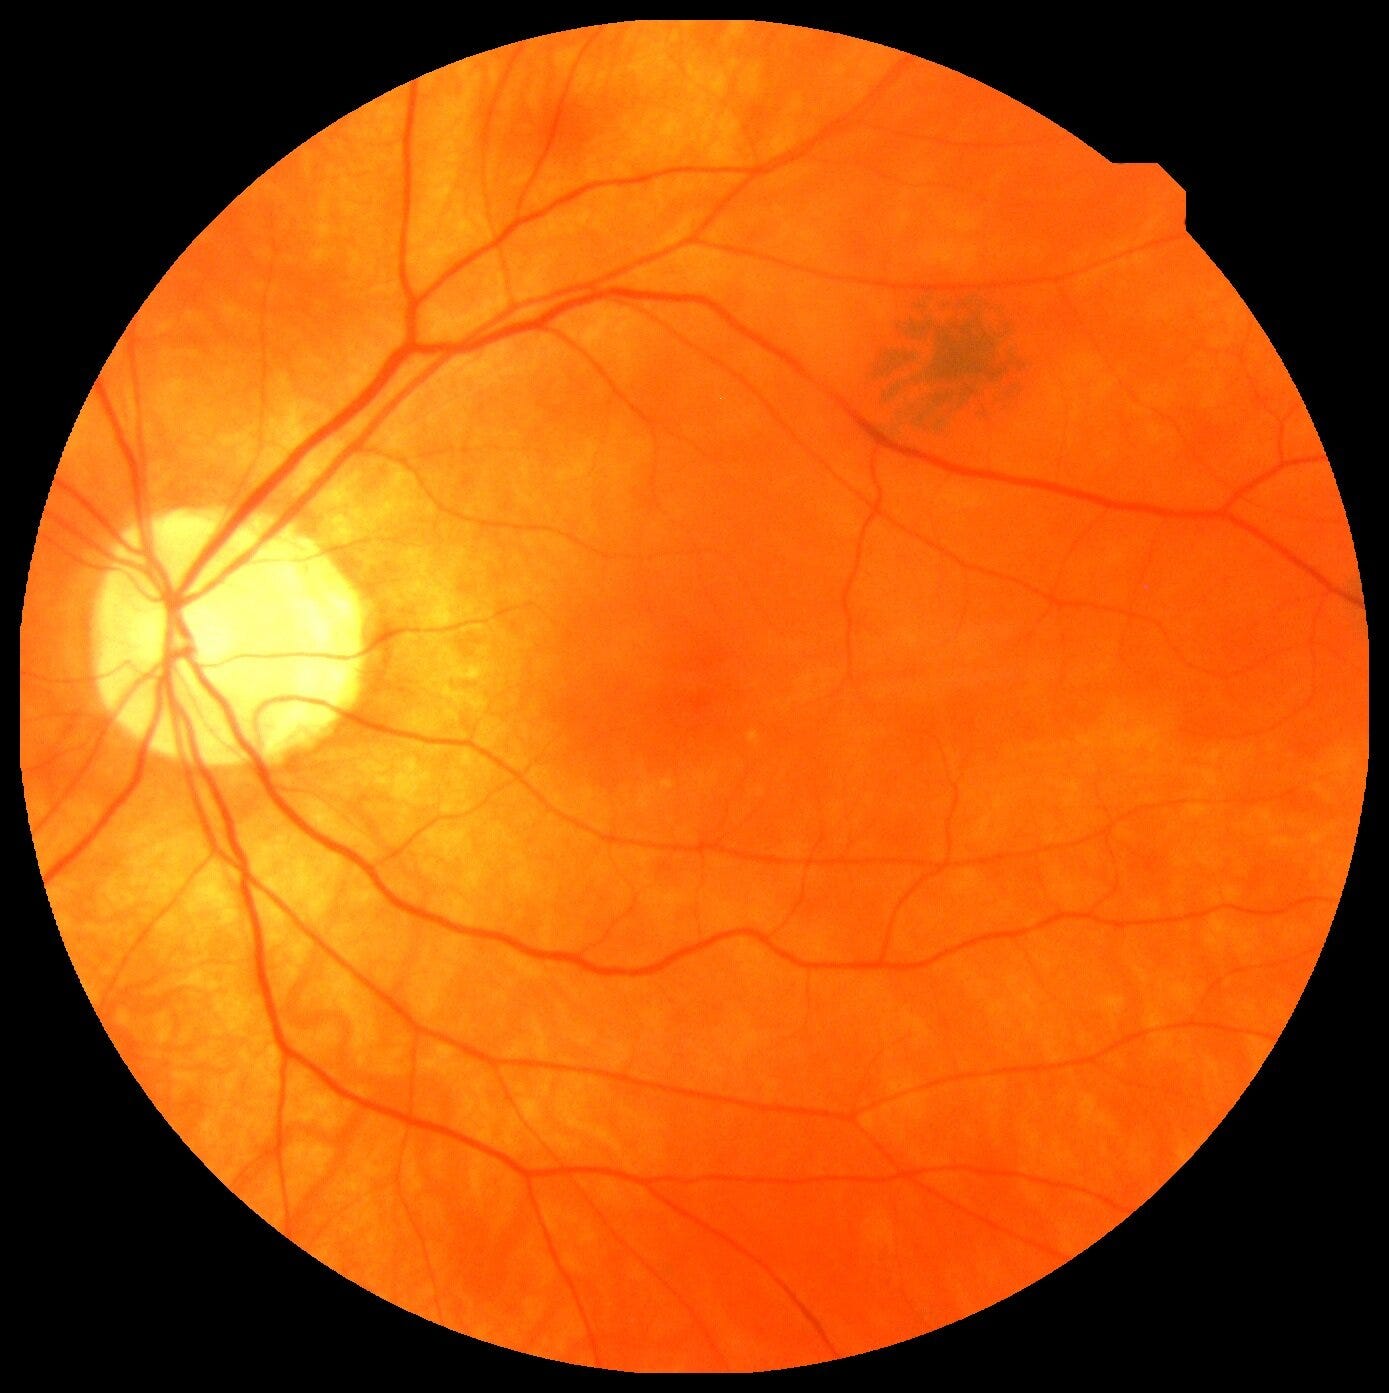 Using the eye as a window into heart disease